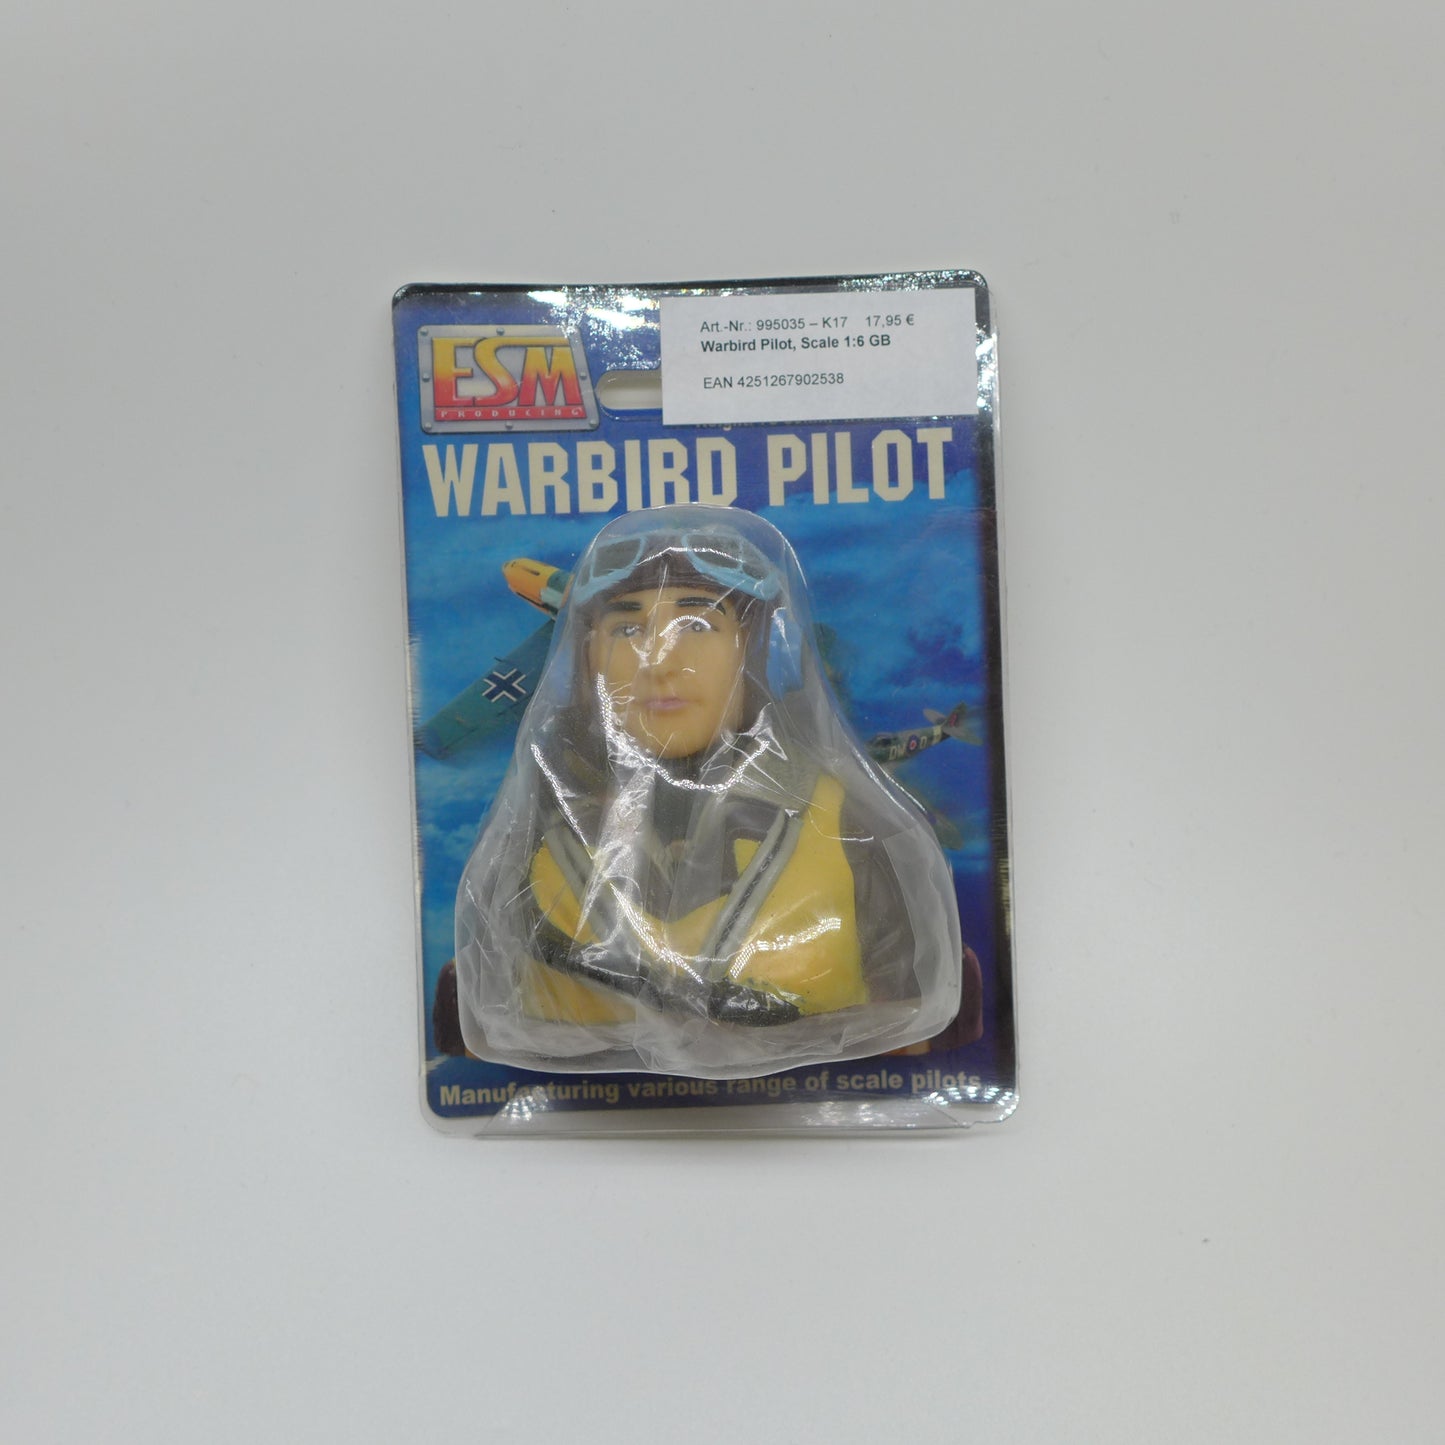 Warbird Pilot, Scale 1:6 GB